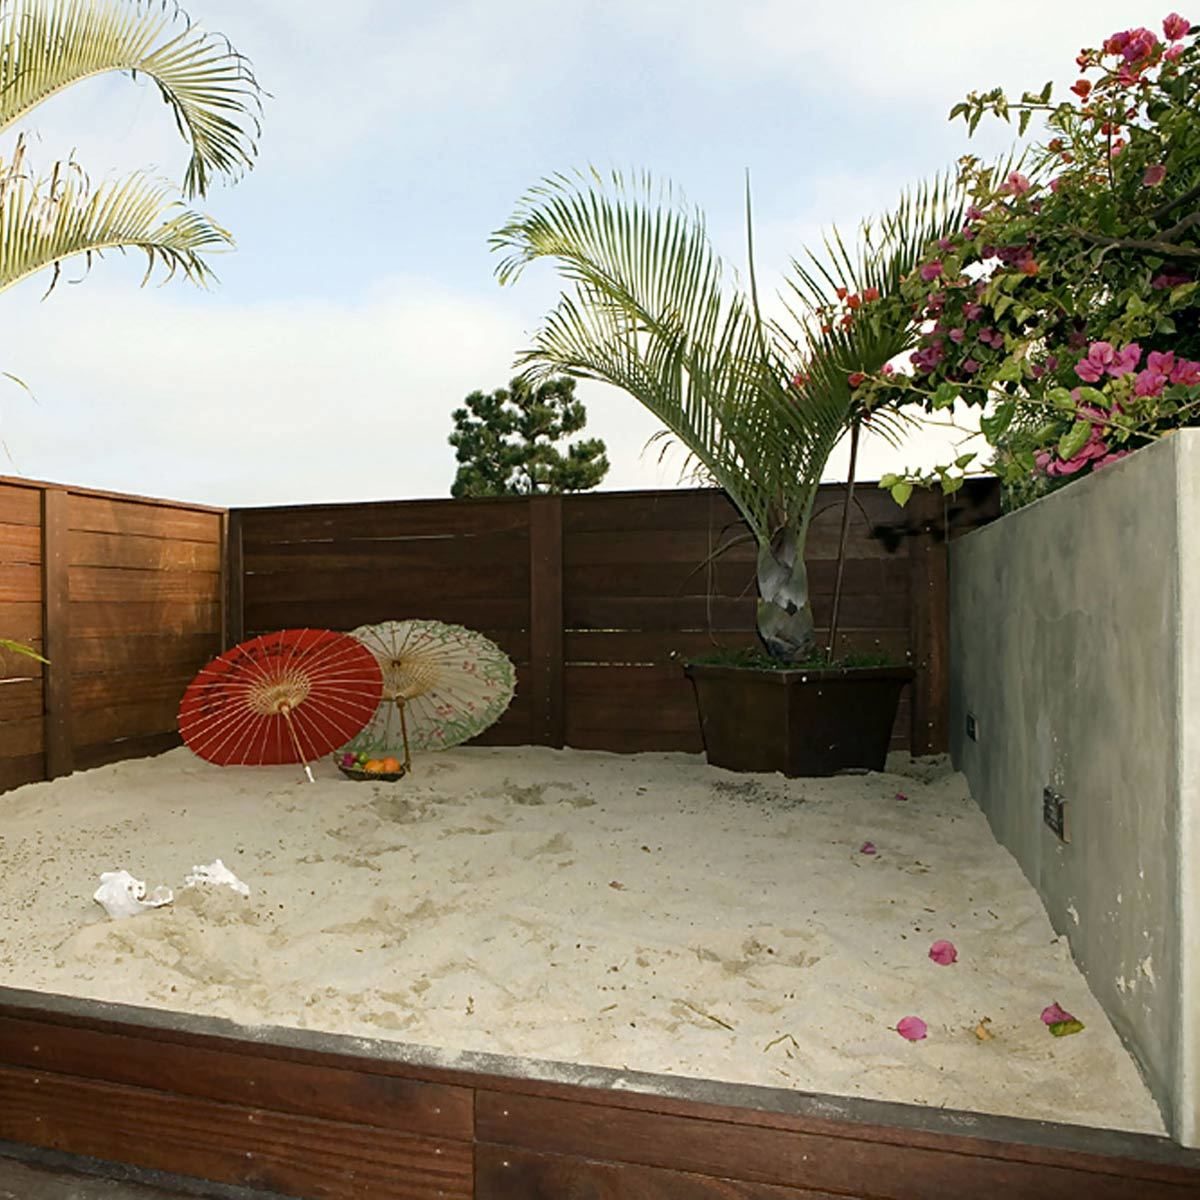 kinetic sand for outdoor sandbox